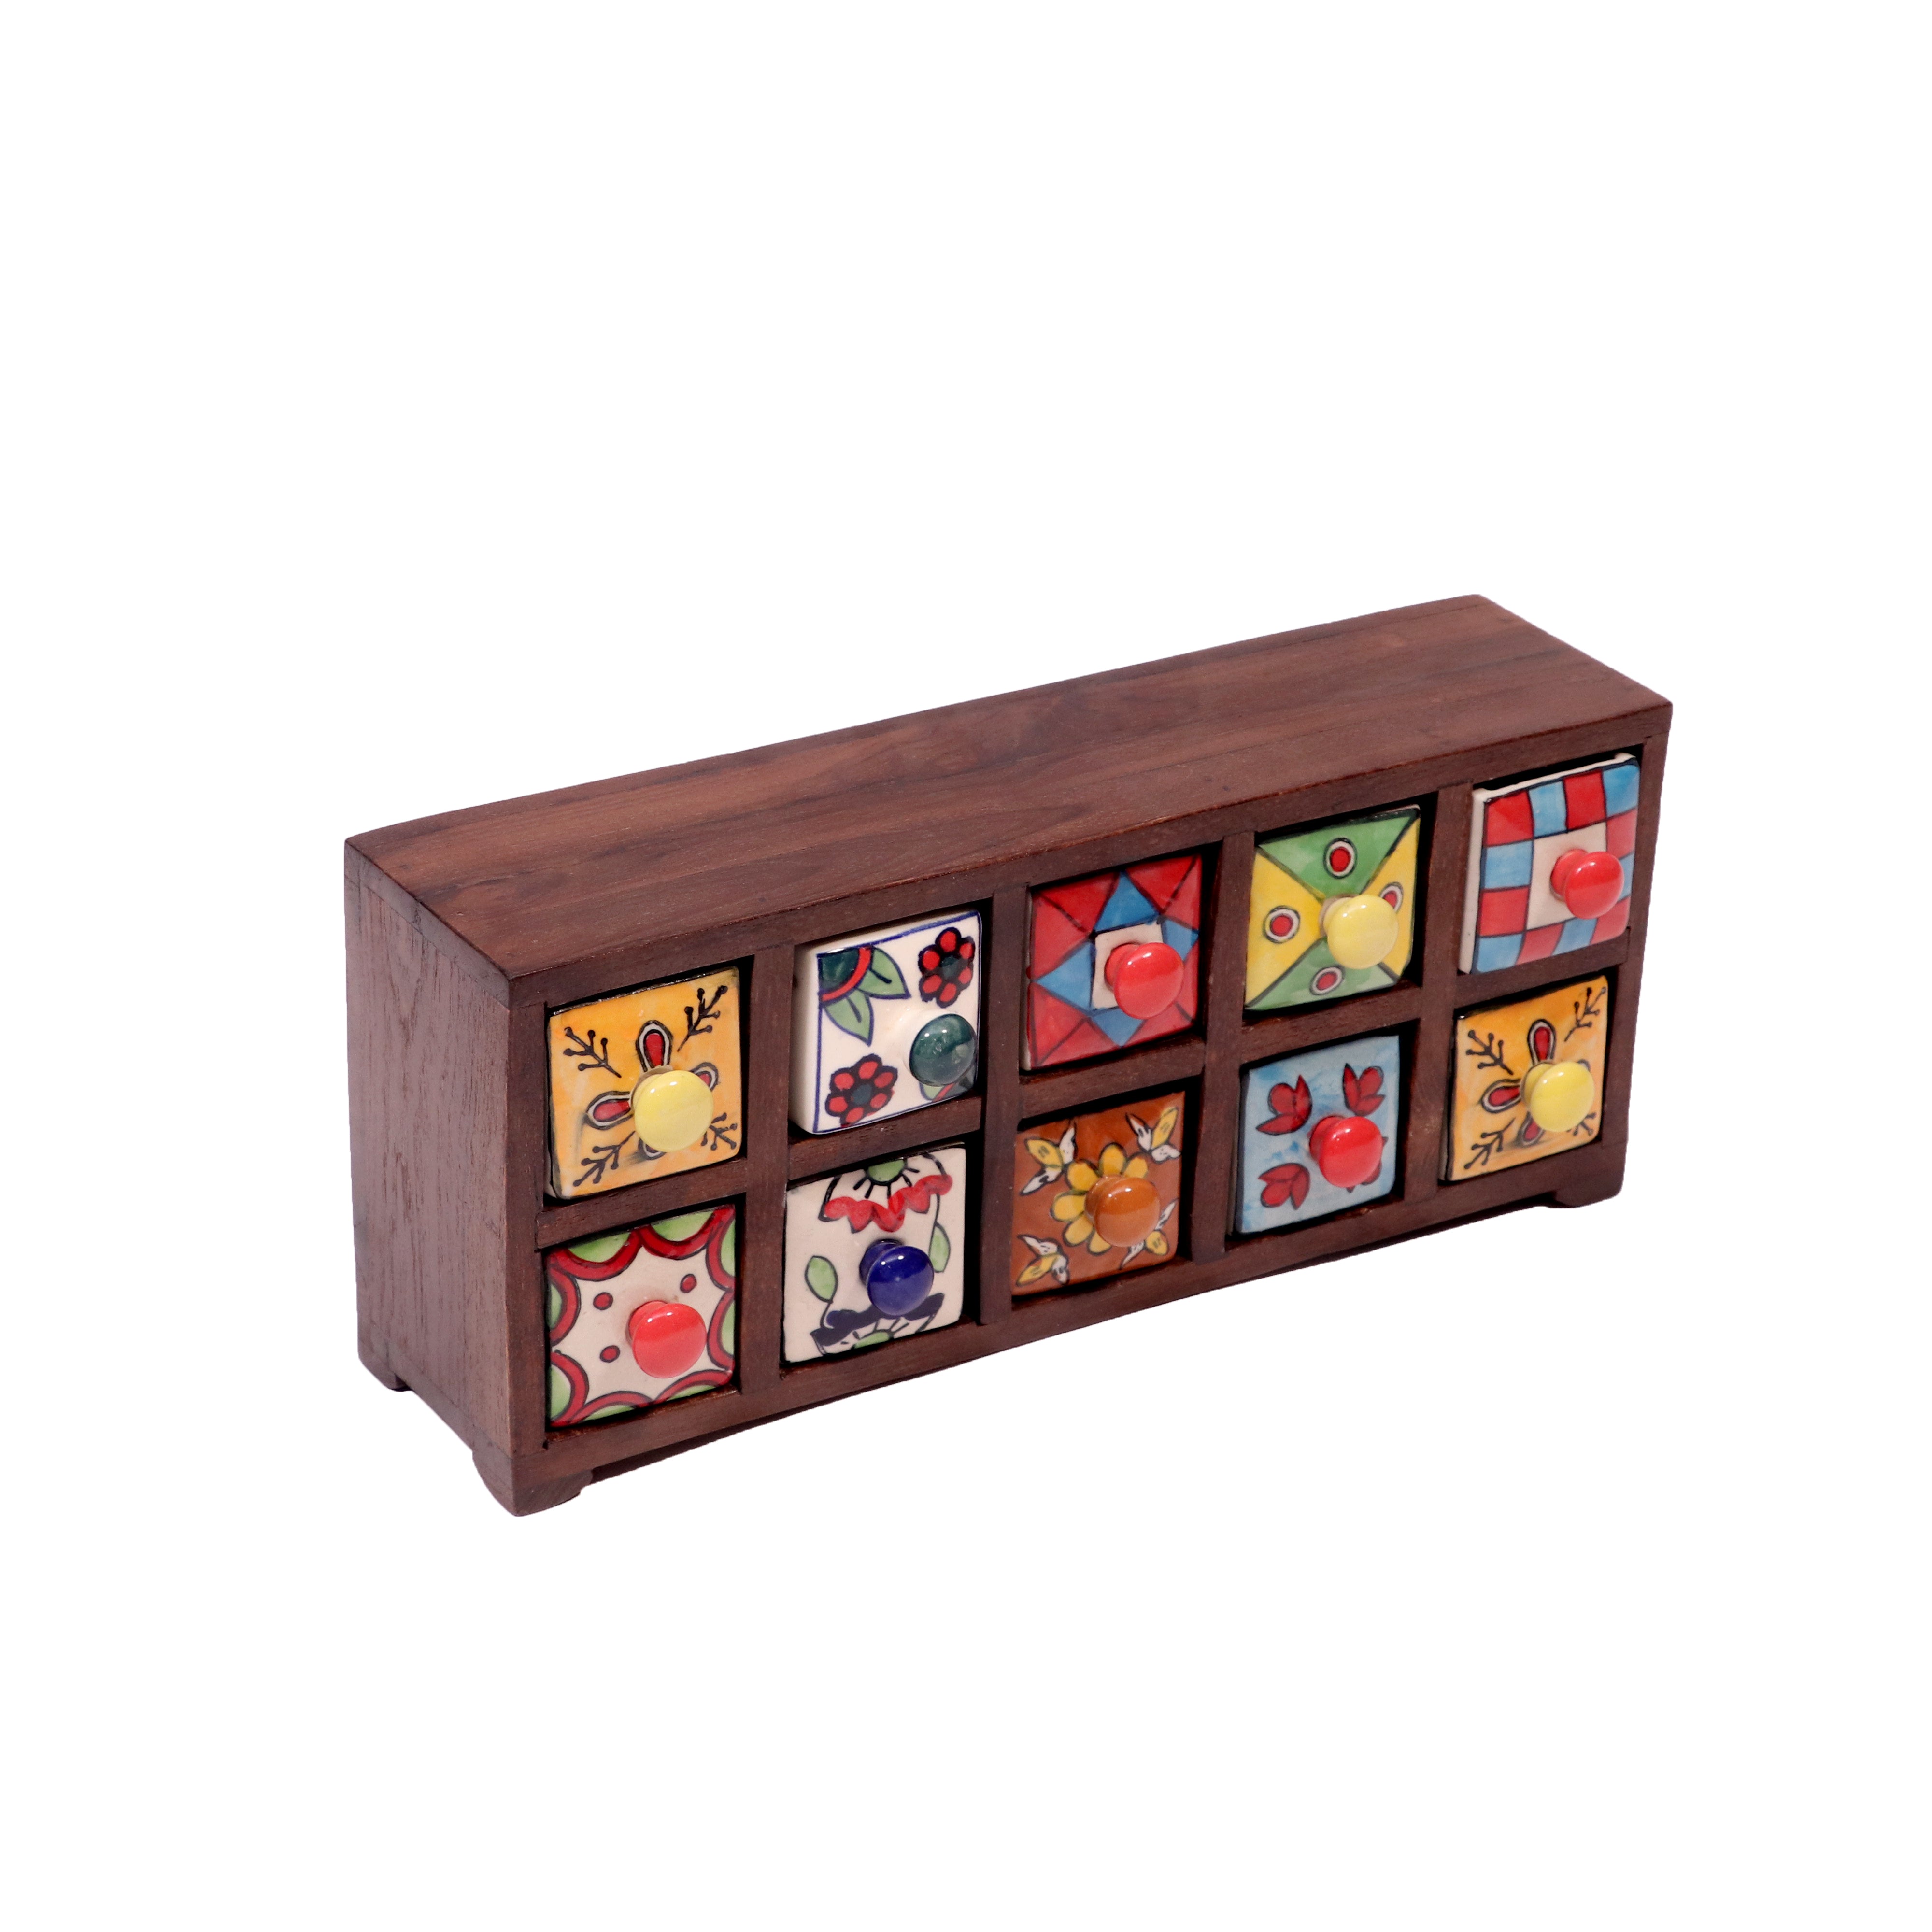 10 drawers double row ceramic miniature chest-(Dark Touch) Desk Organizer